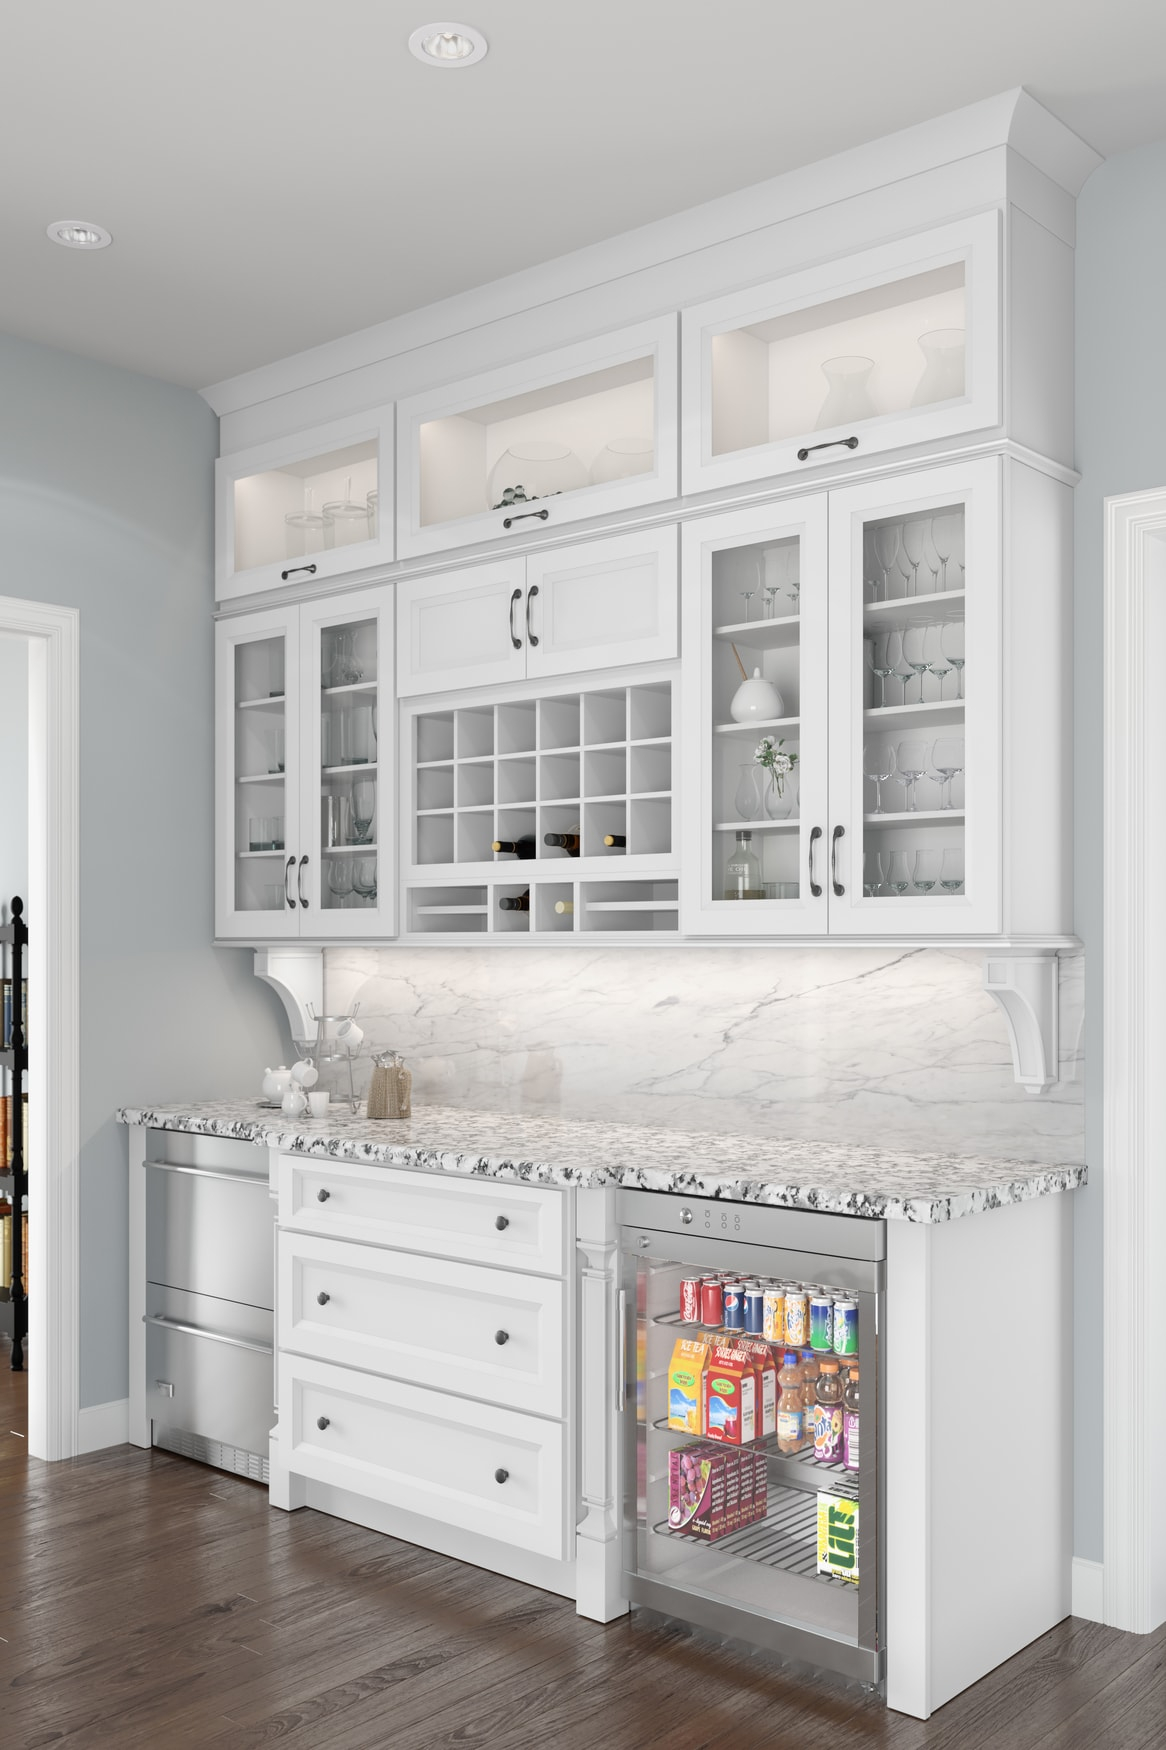 RTA - Elegant White - Double Drawer Front 2 Door Sink Base Cabinet | 4